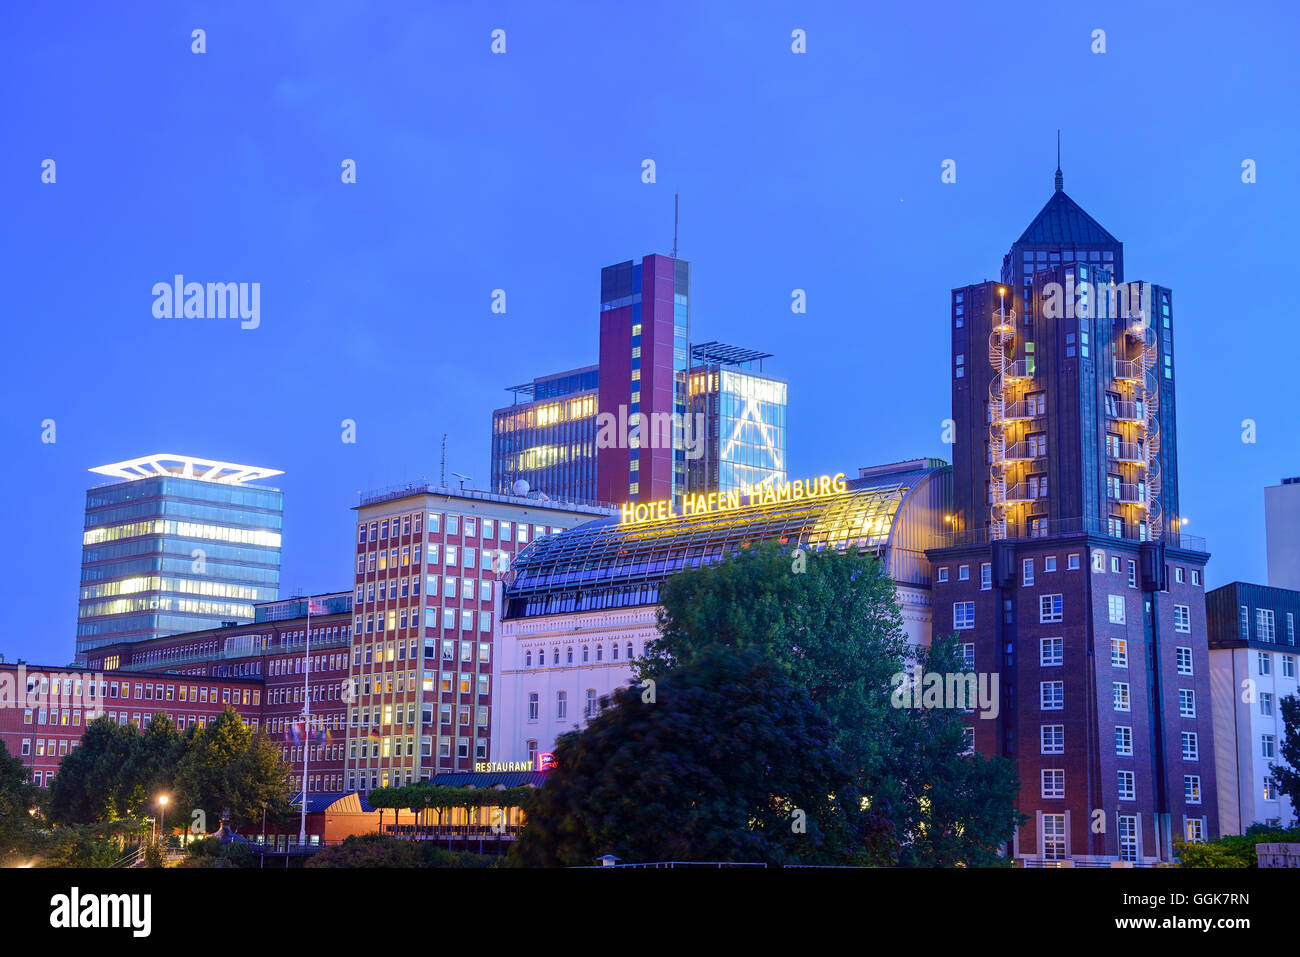 Illuminated skyscrapers with hotel Hafen Hamburg, Landungsbruecken, Hamburg, Germany Stock Photo